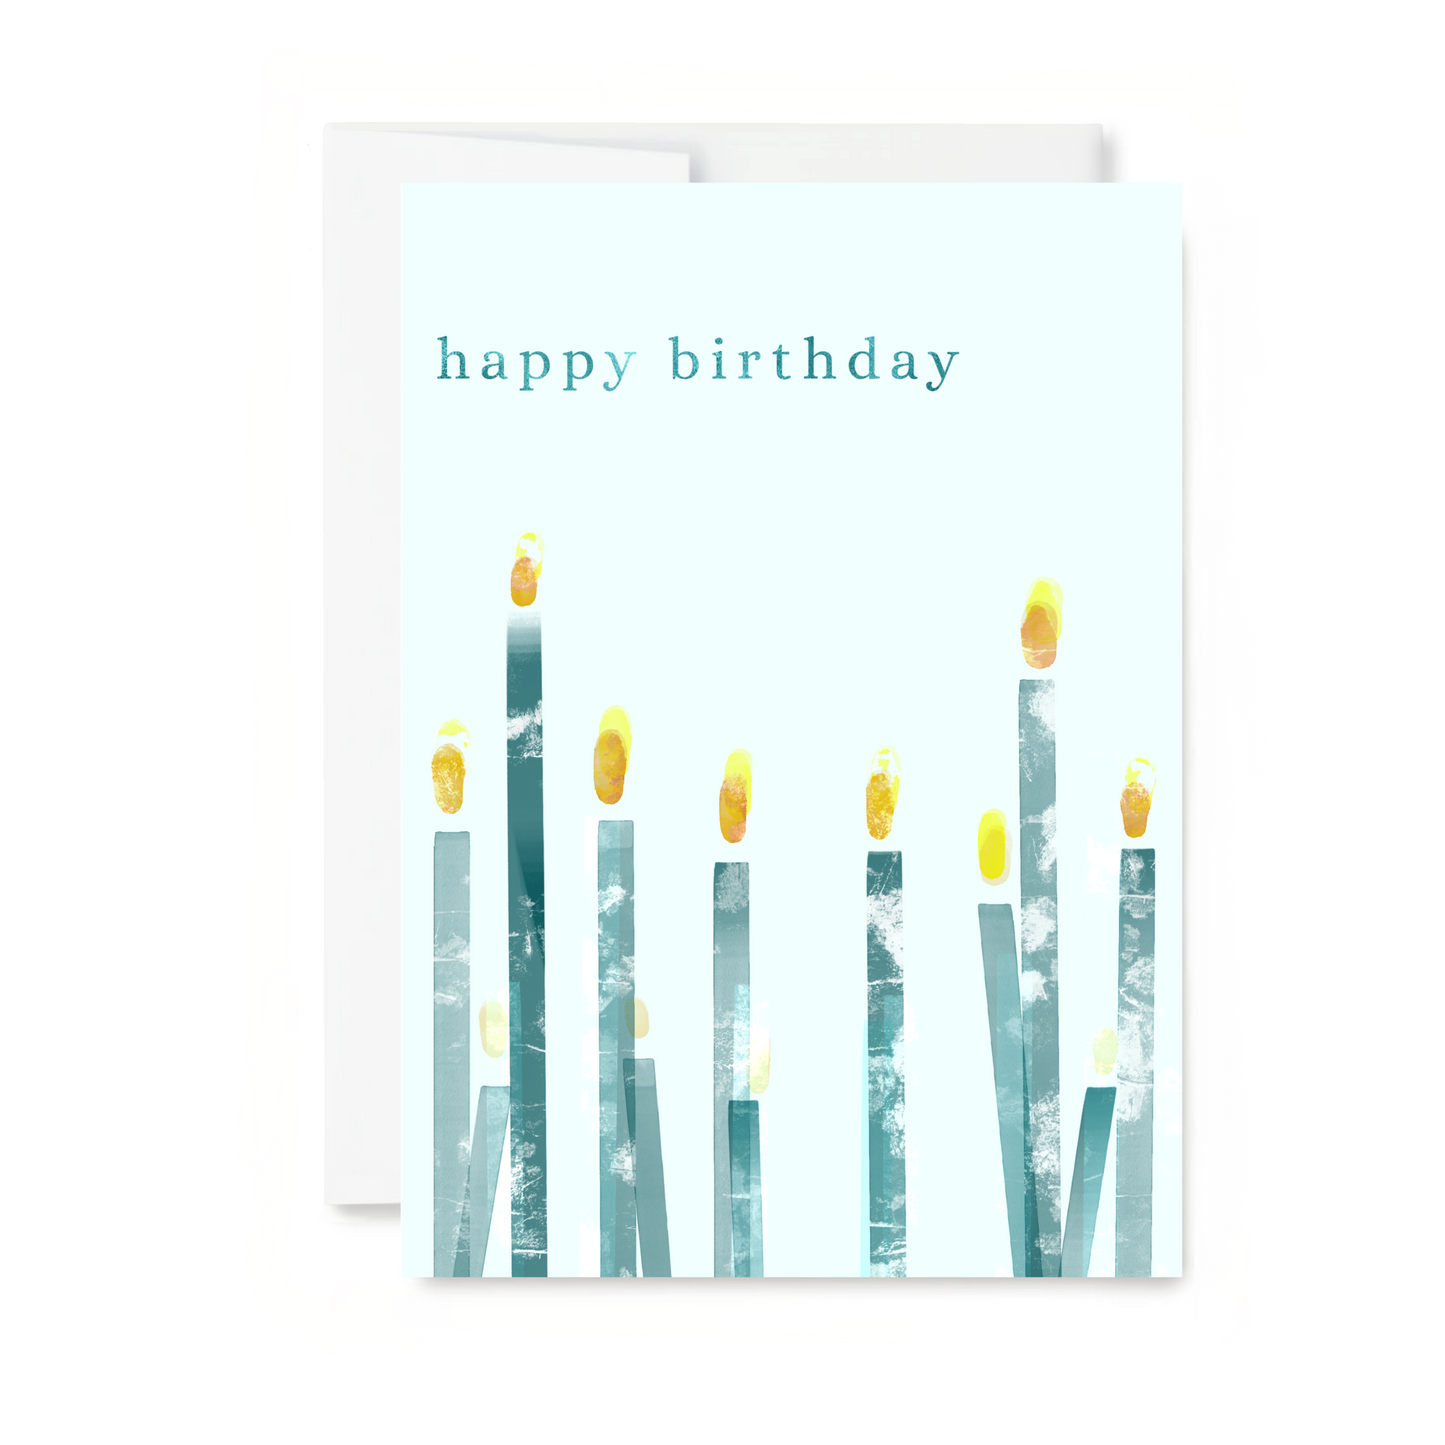 Candles - Happy Birthday Card